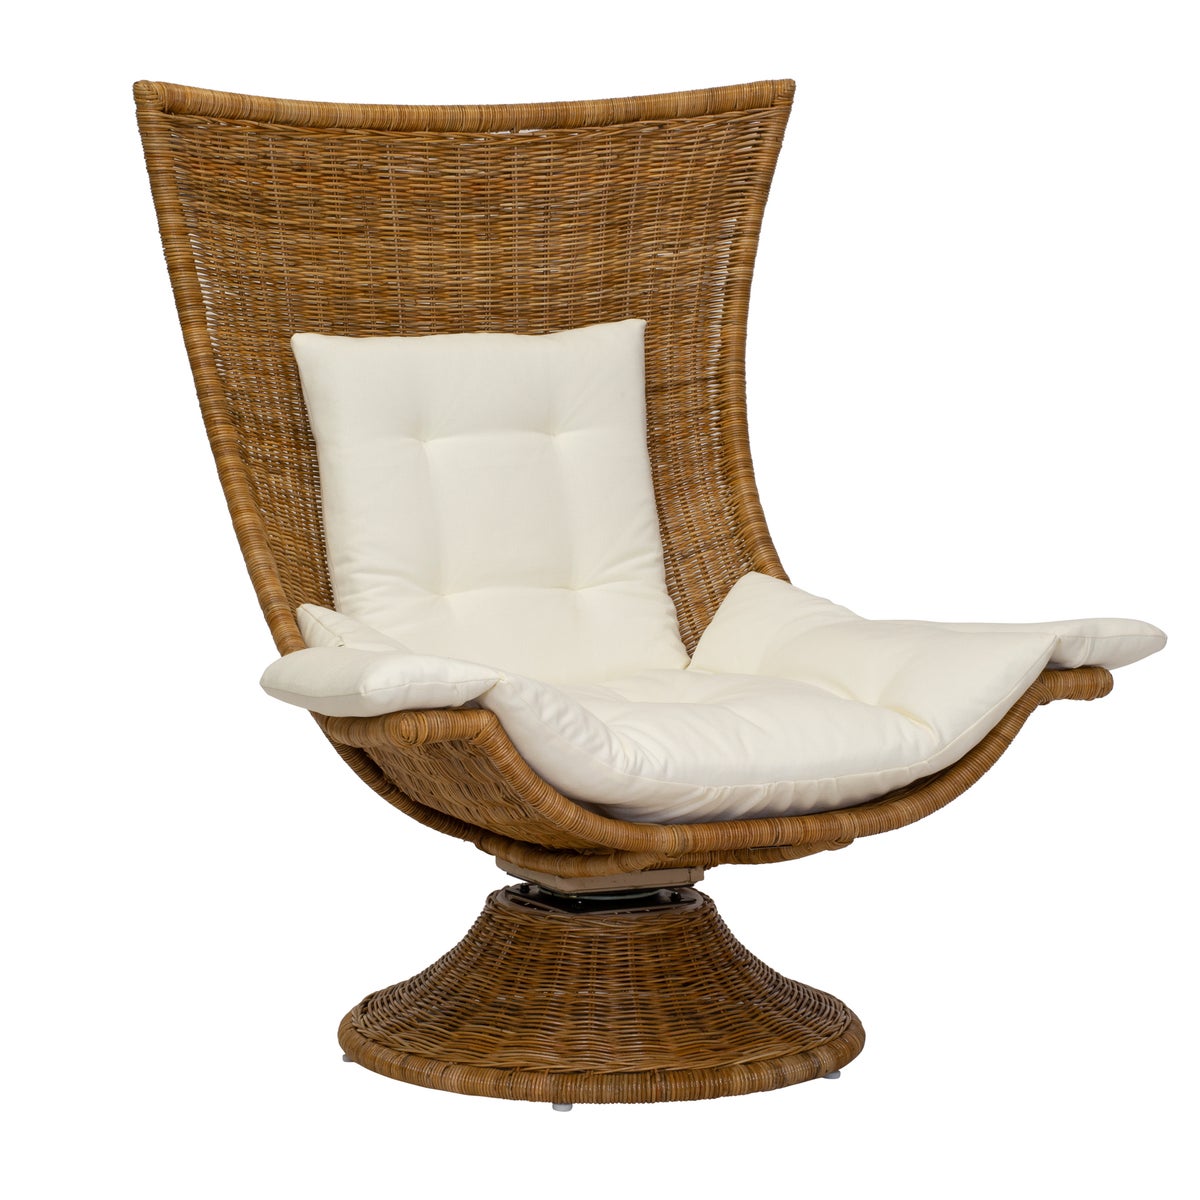 Healdsburg Swivel Chair in Natural